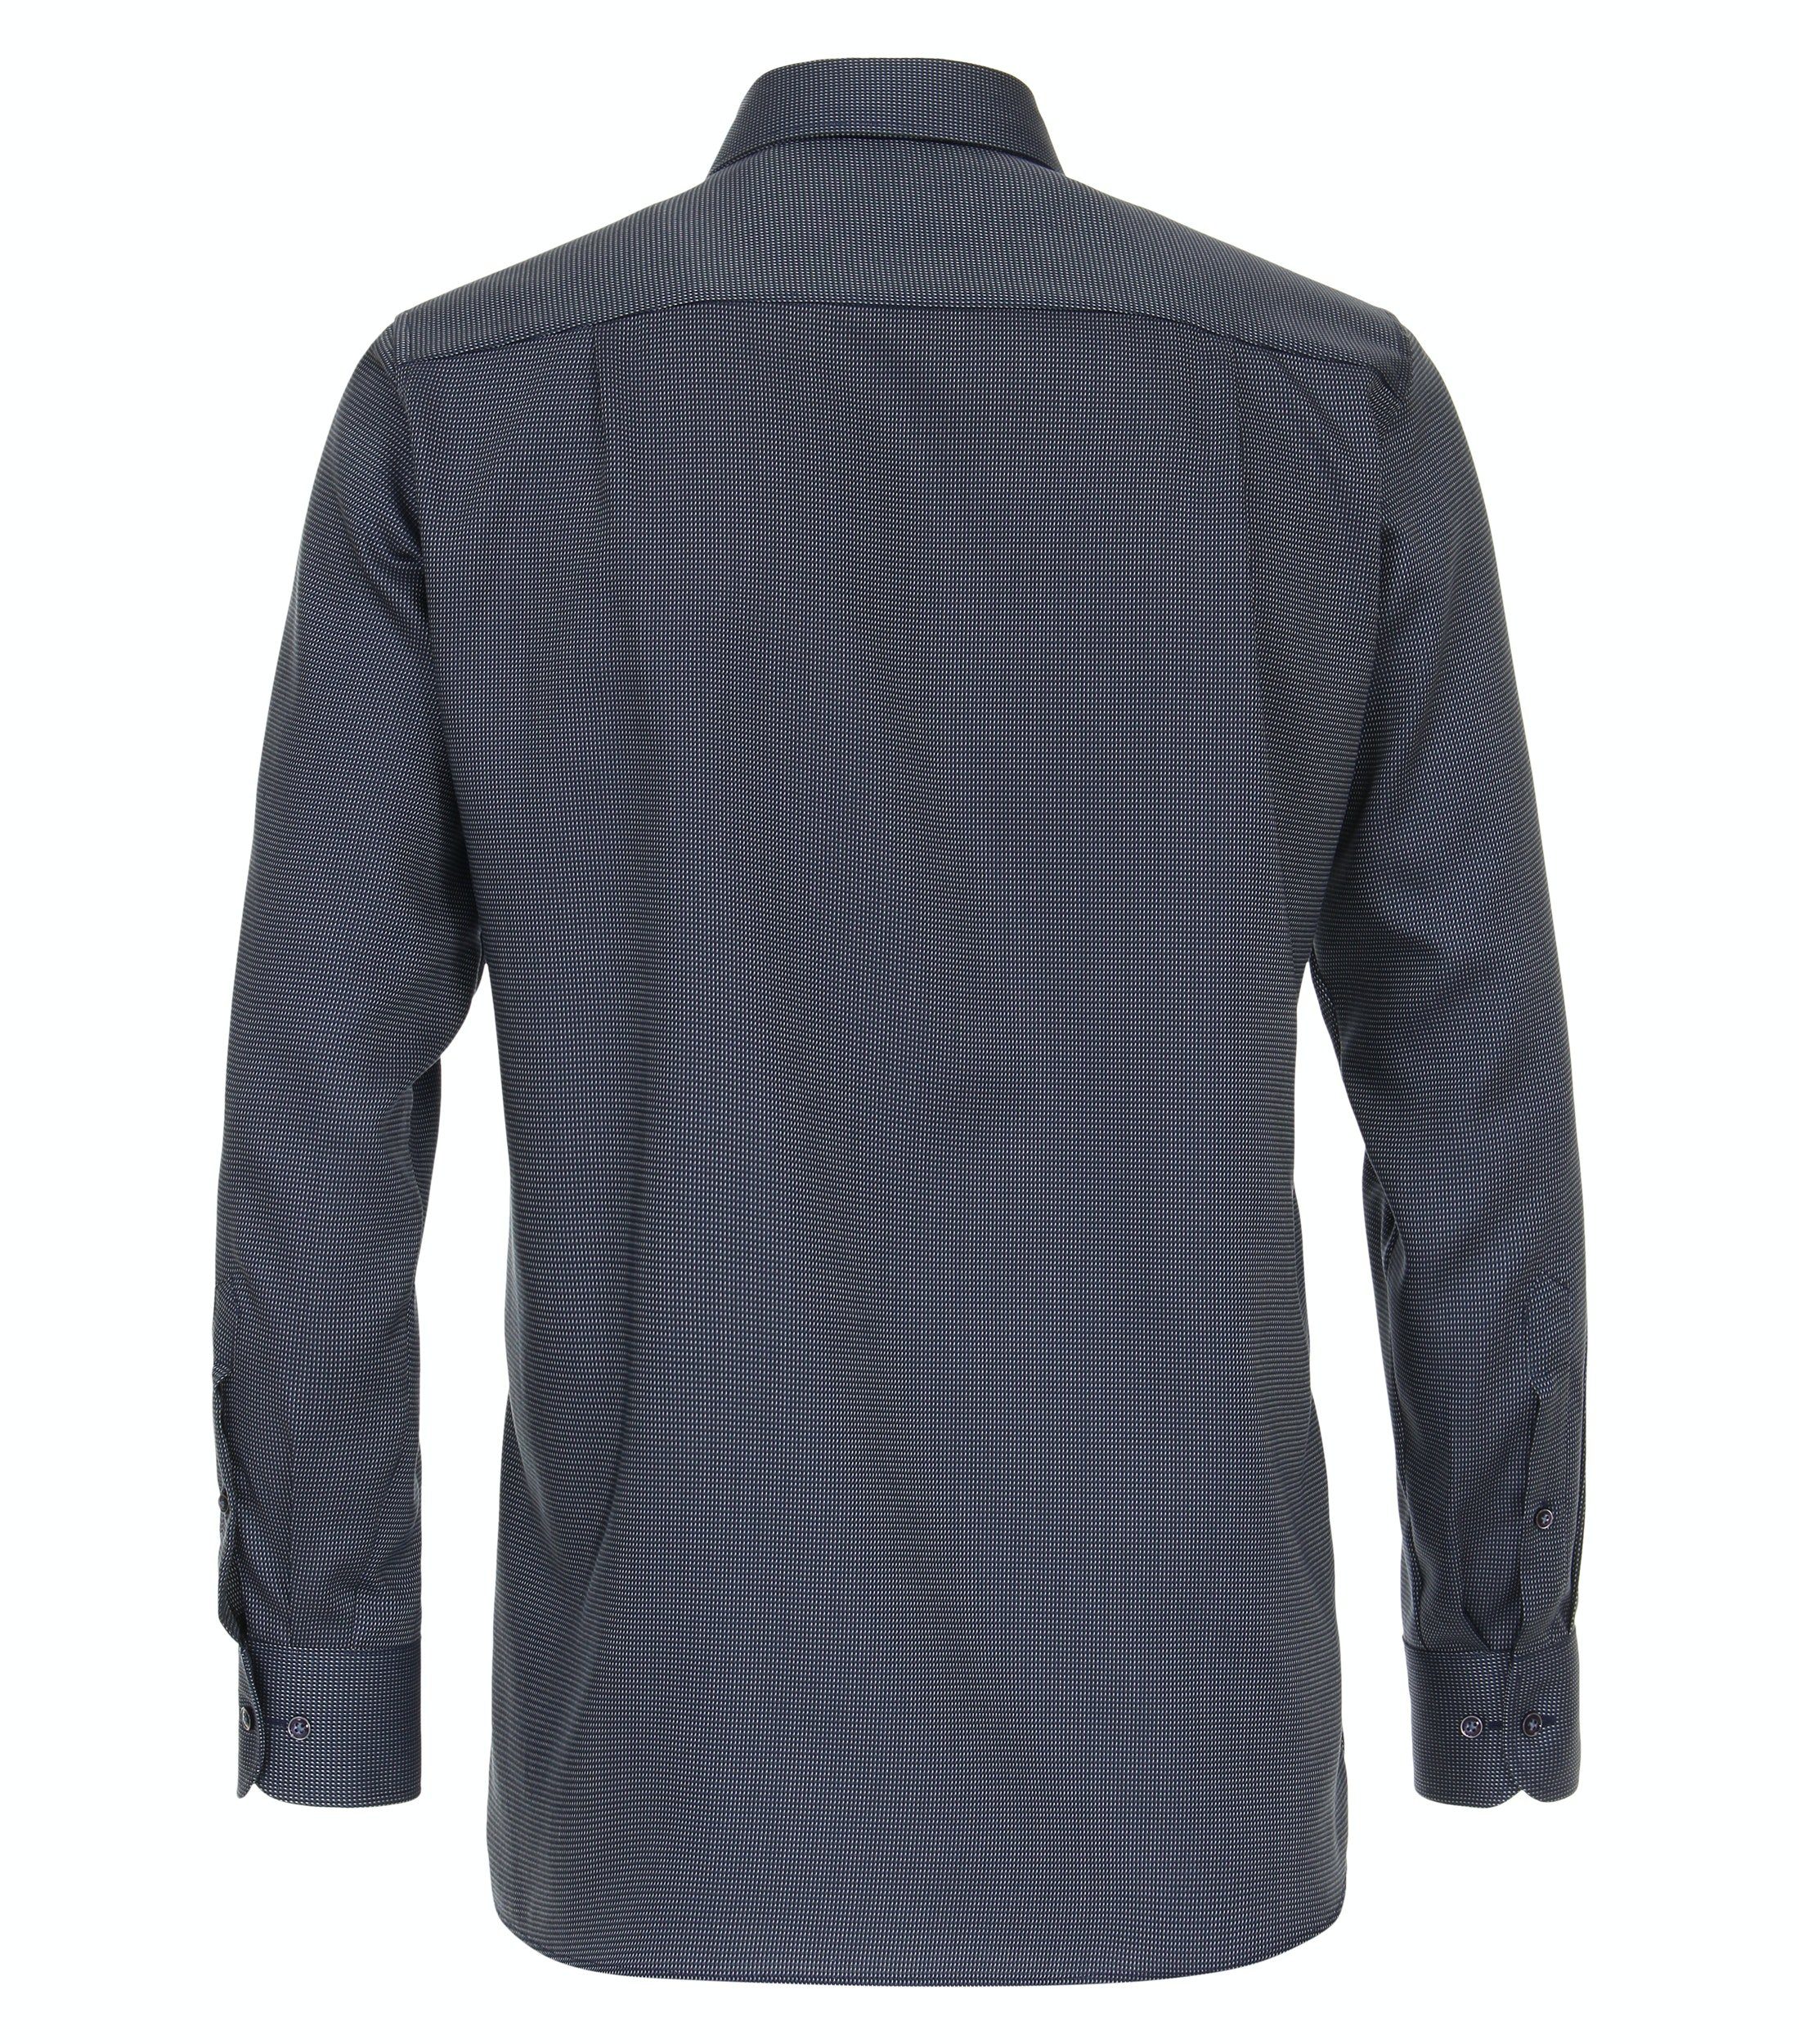 - CASAMODA - - Mittelblau Langarm Comfort Einfarbig Businesshemd dunkles Businesshemd - Fit Dunkelblau